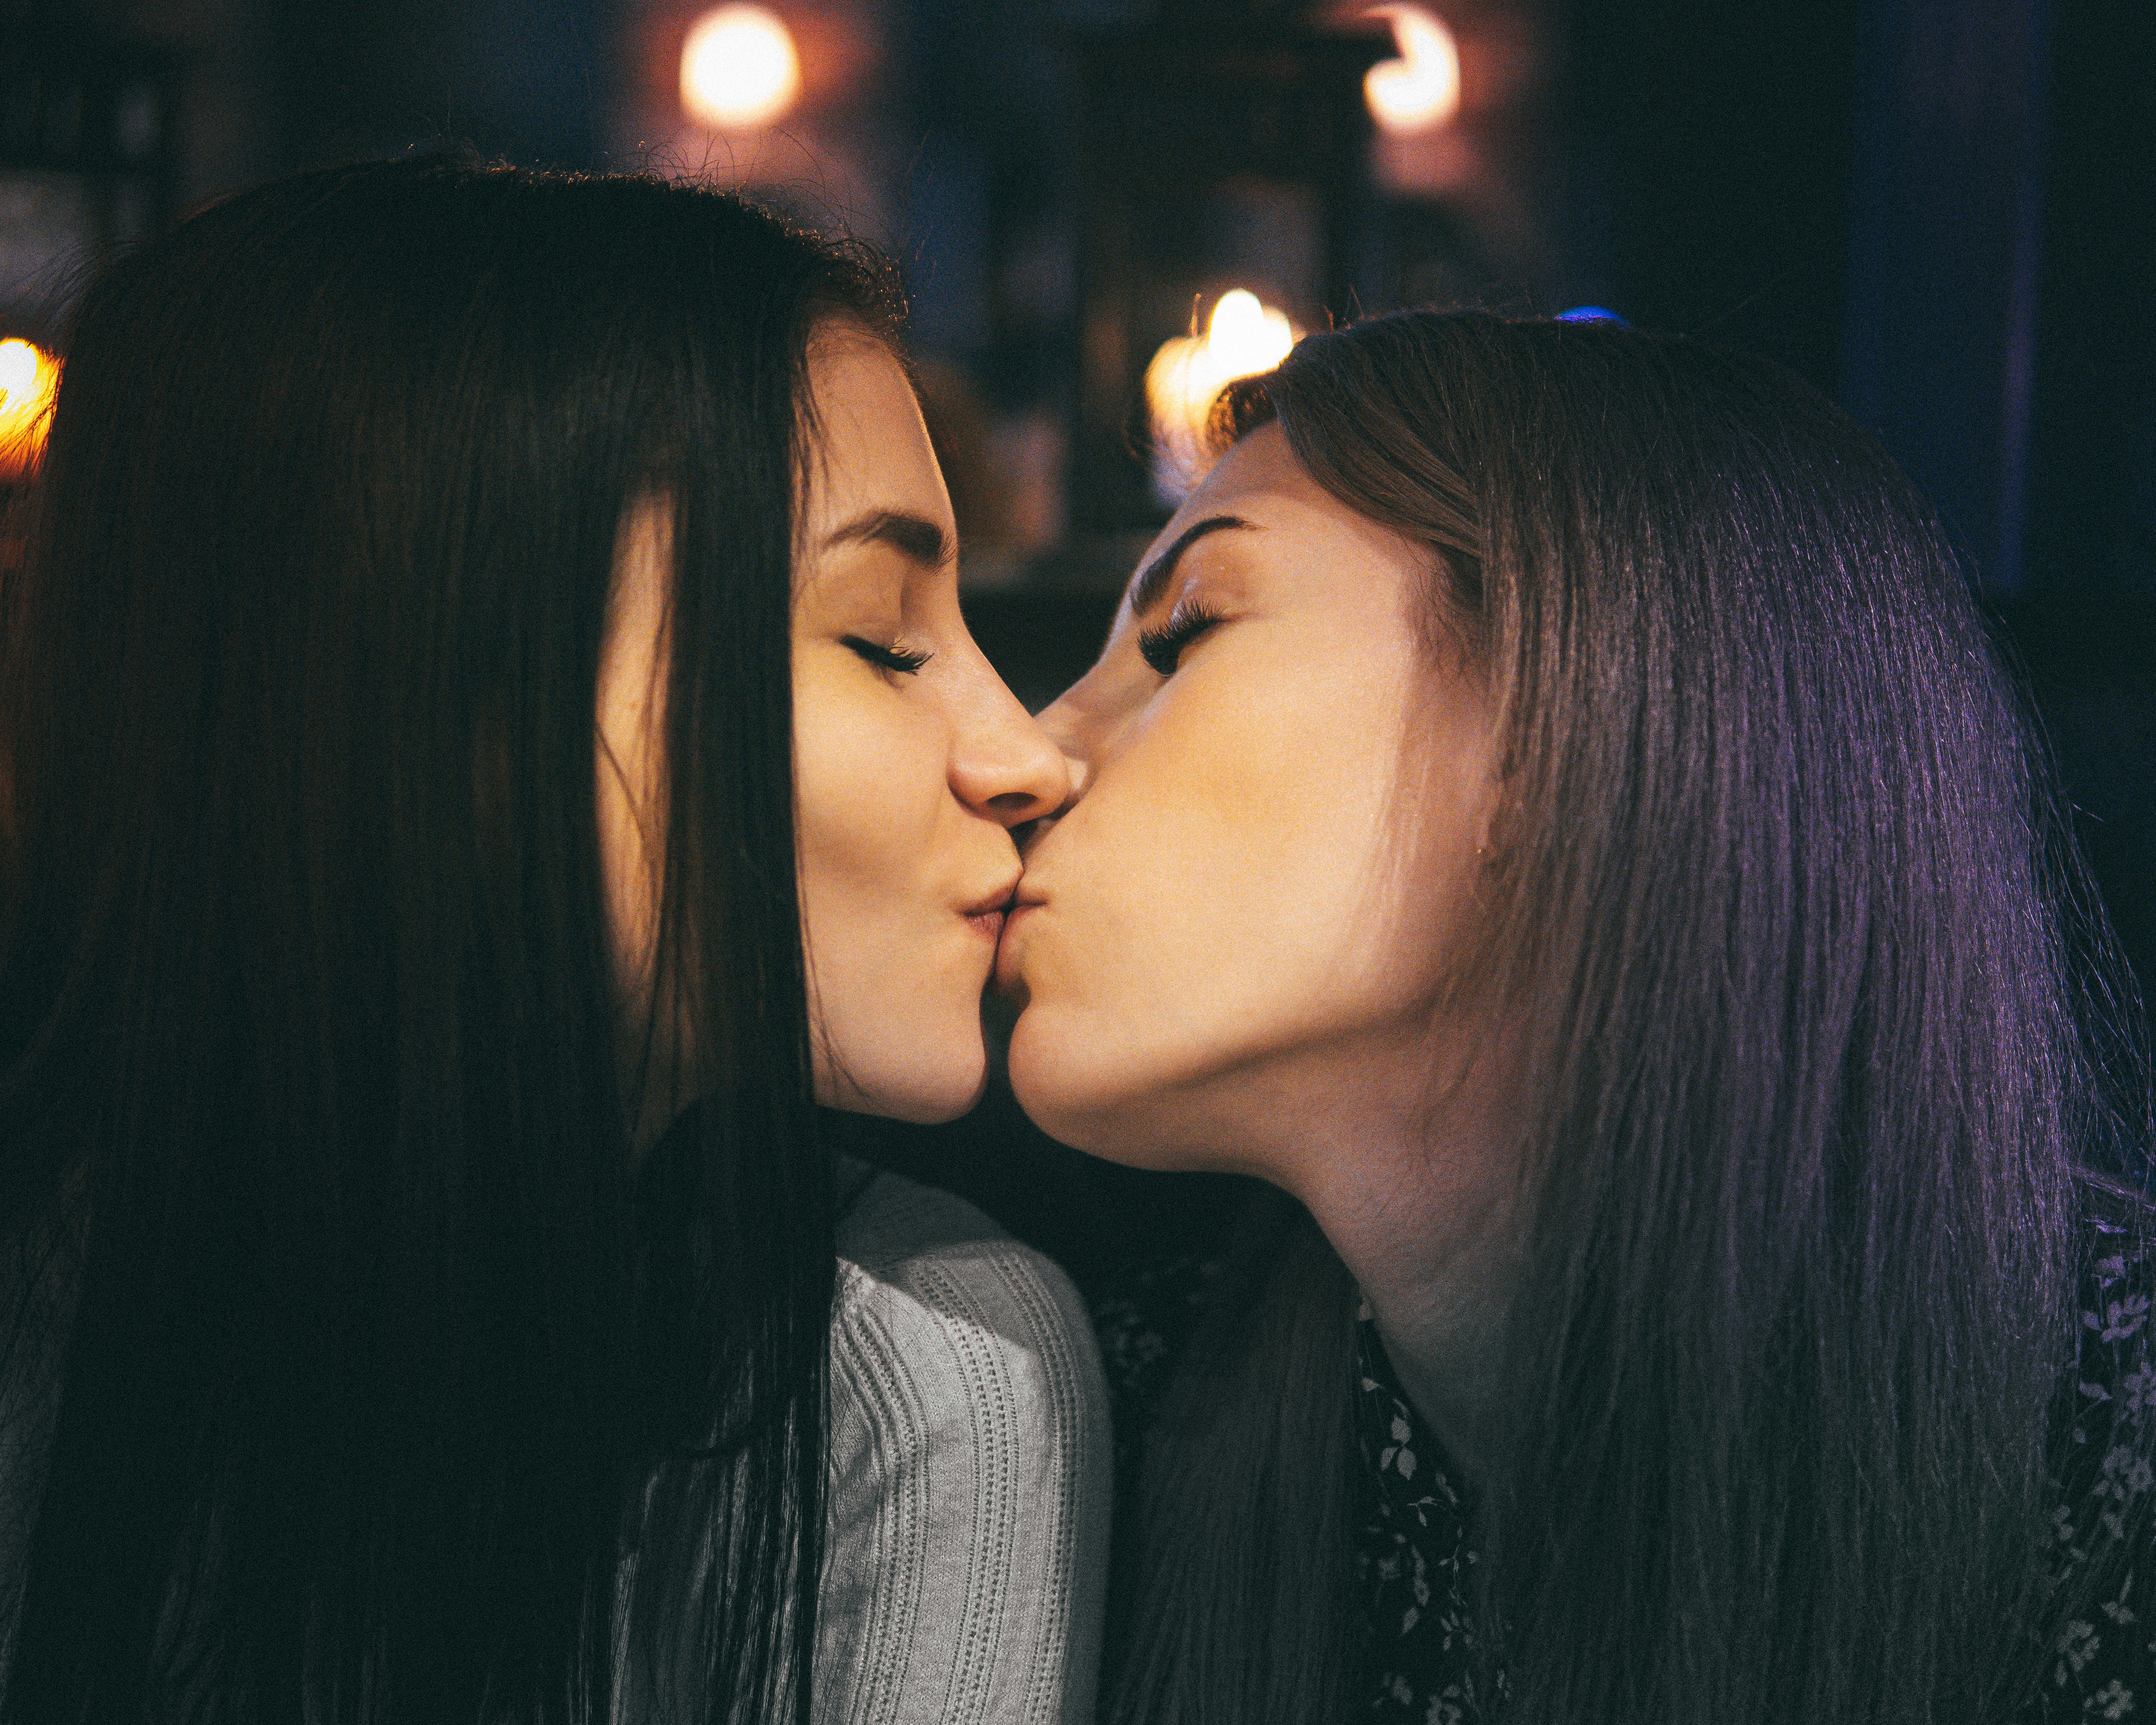 Lesbians Kissing In Panties